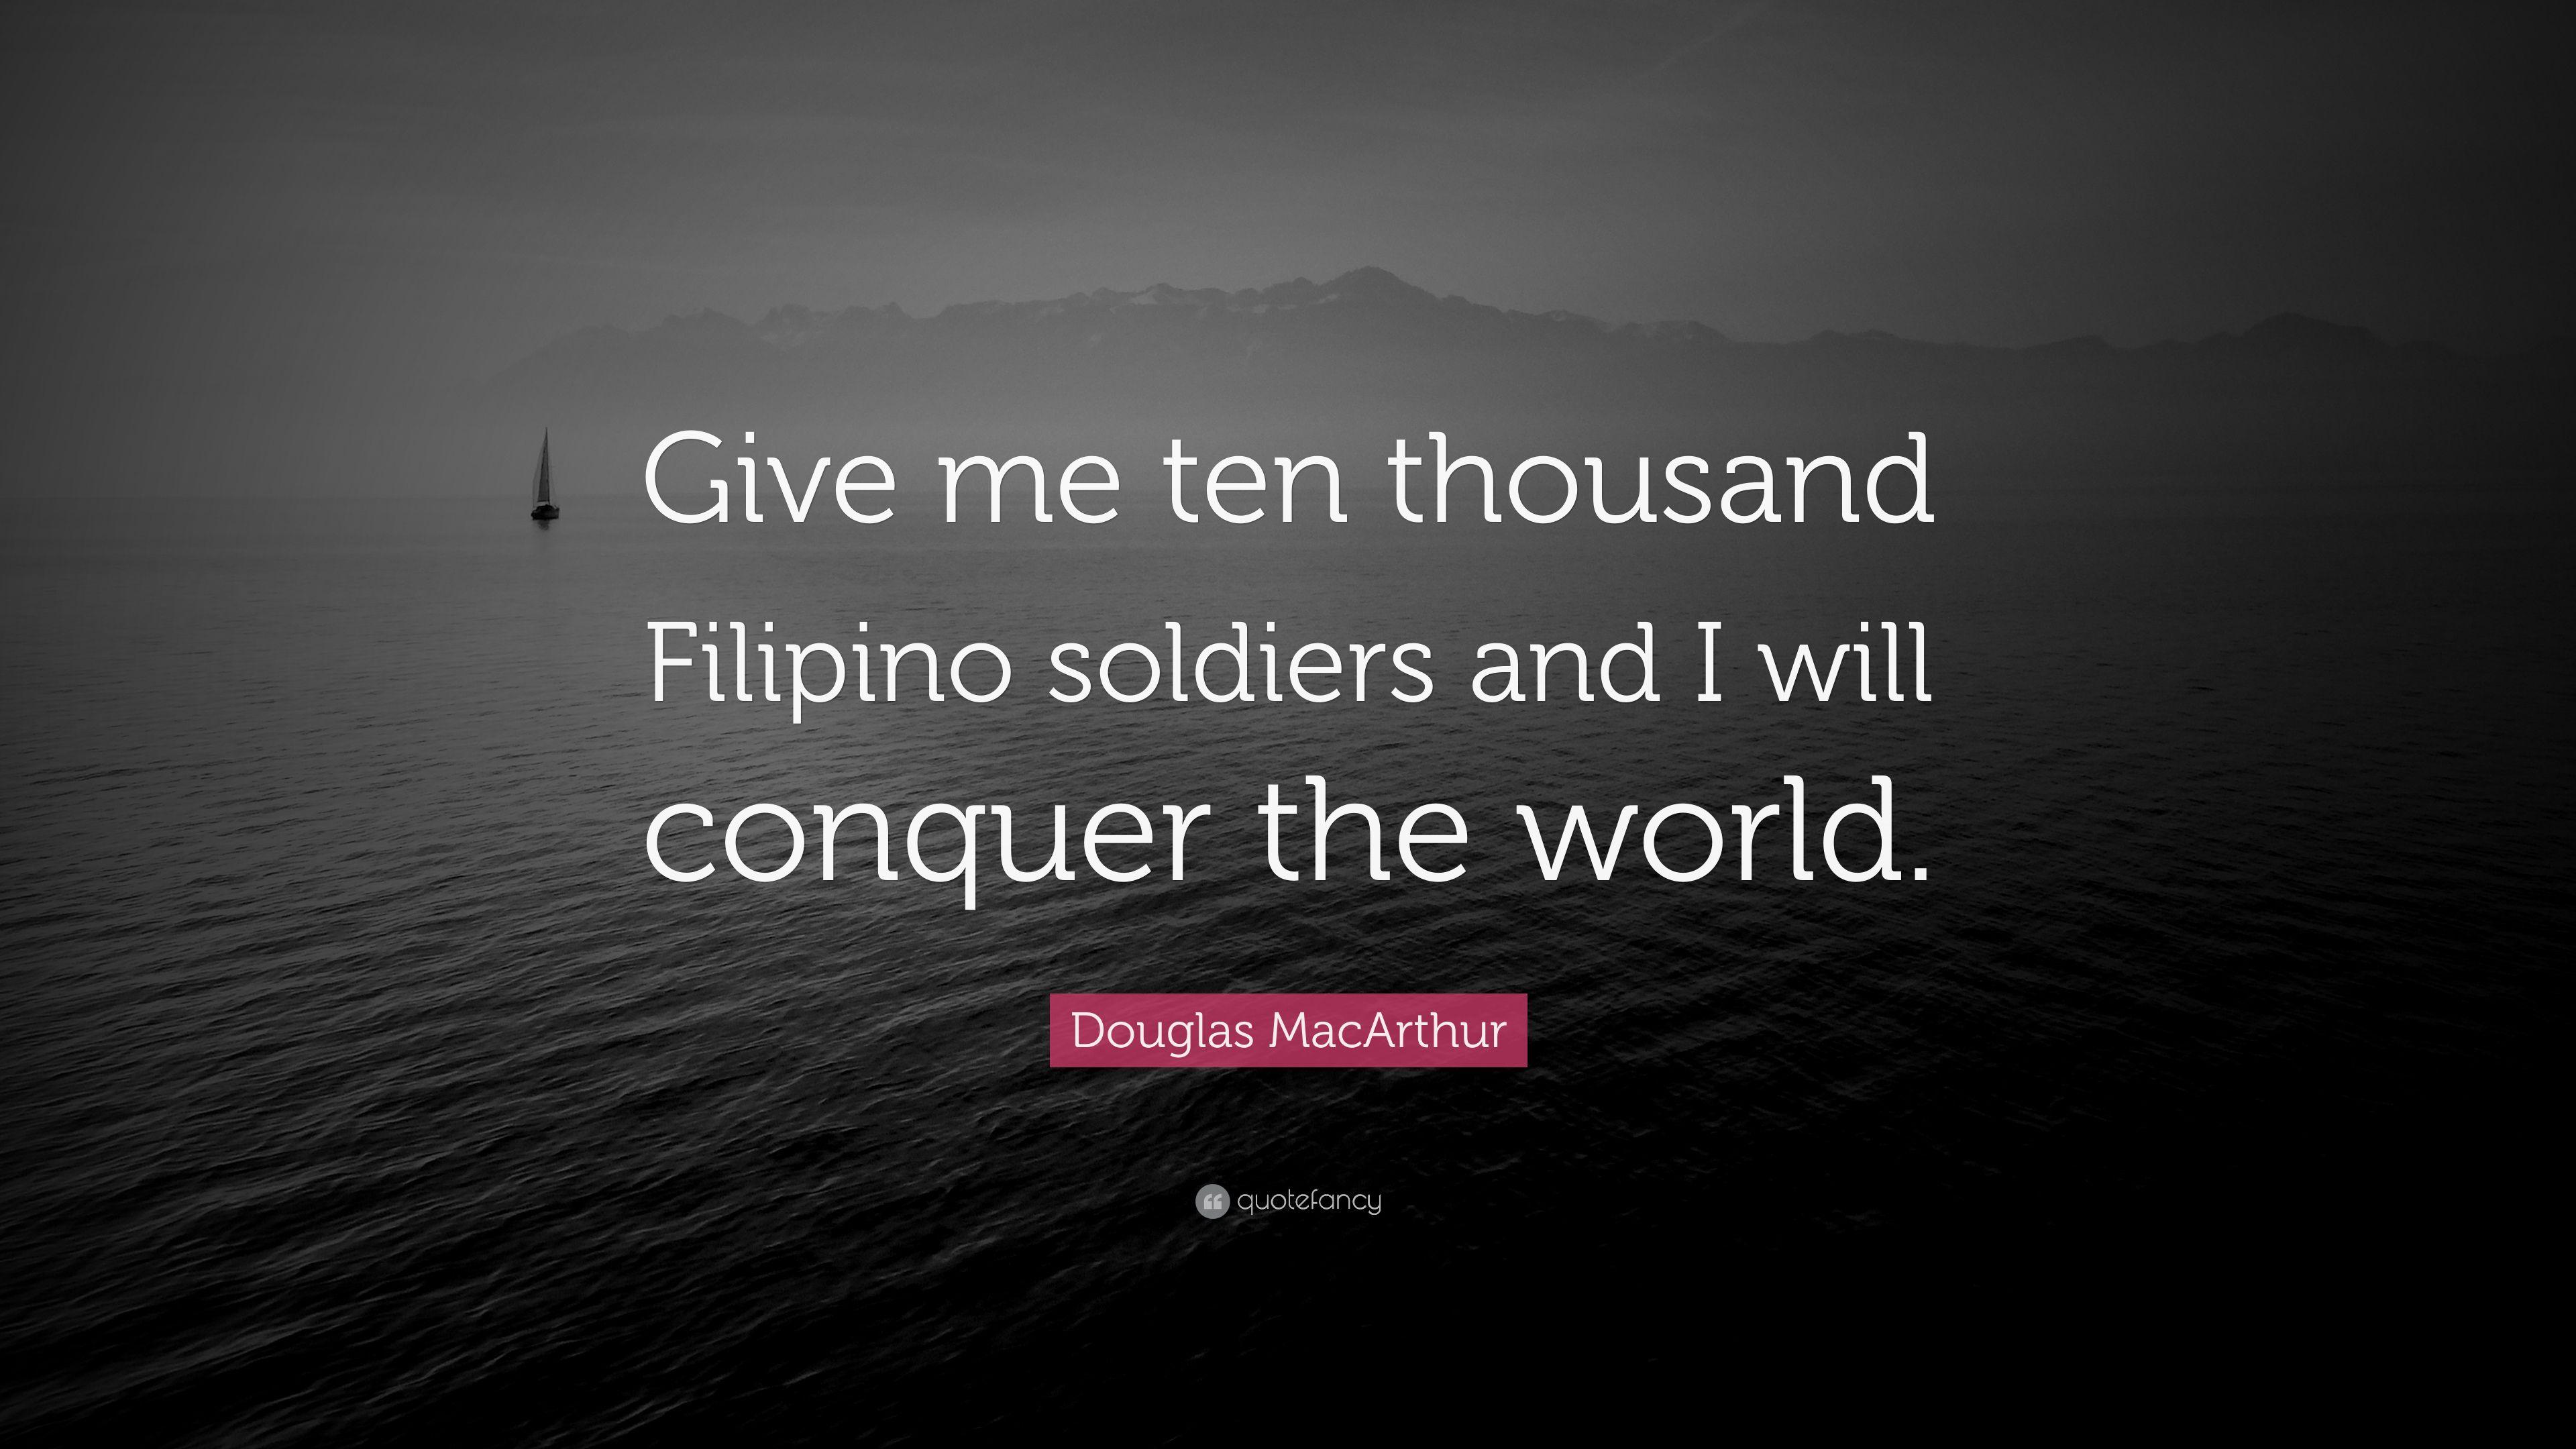 Douglas MacArthur Quote: “Give me ten thousand Filipino soldiers